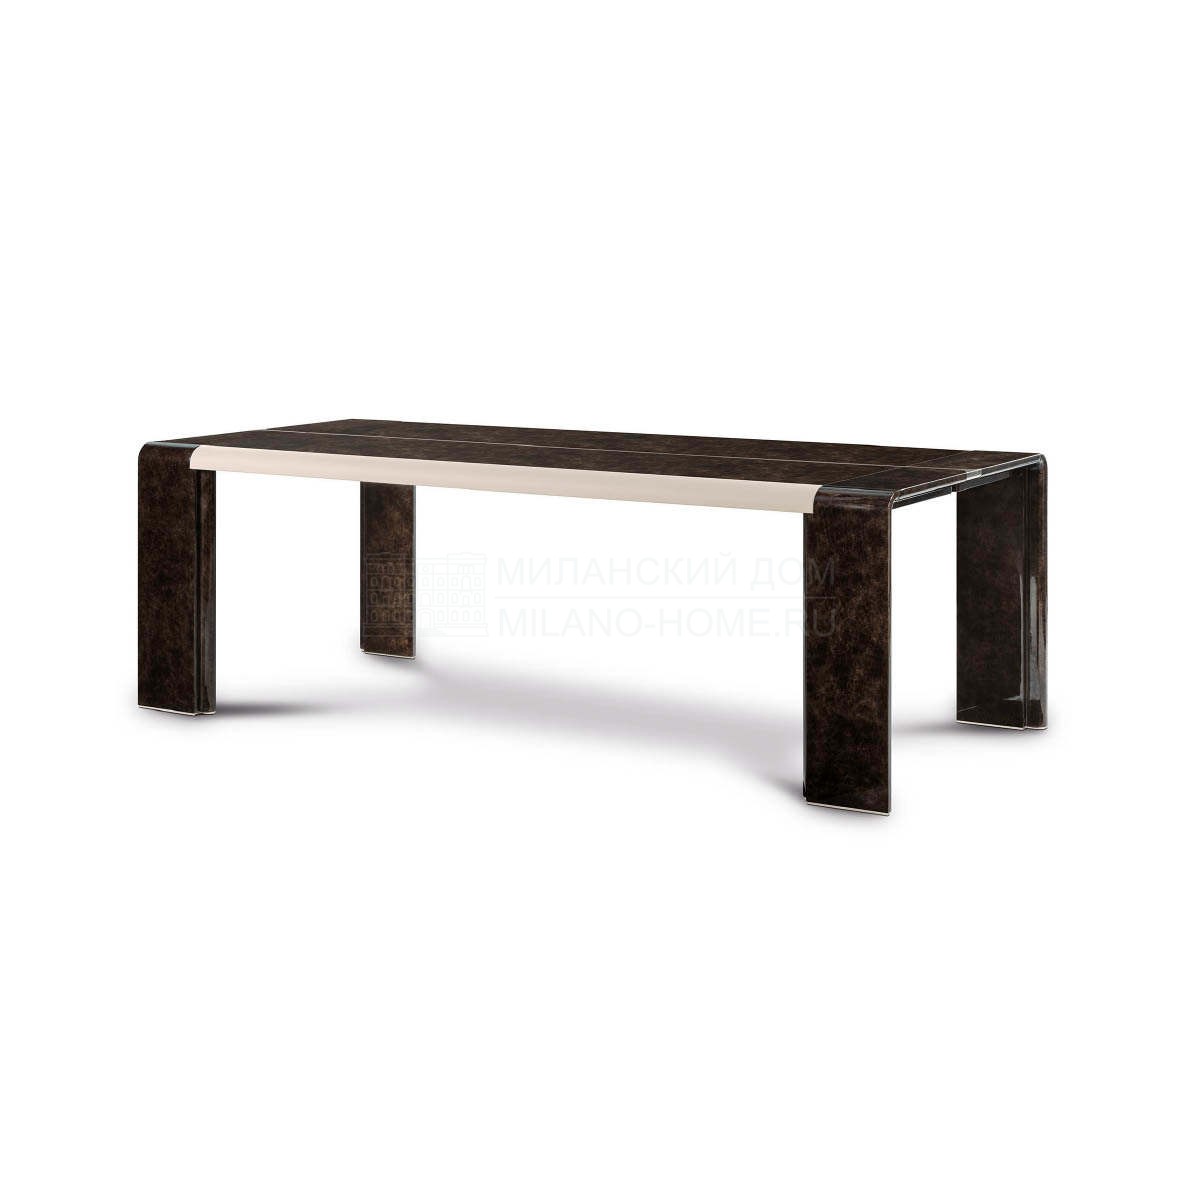 Обеденный стол Madison rectangular table из Италии фабрики TURRI